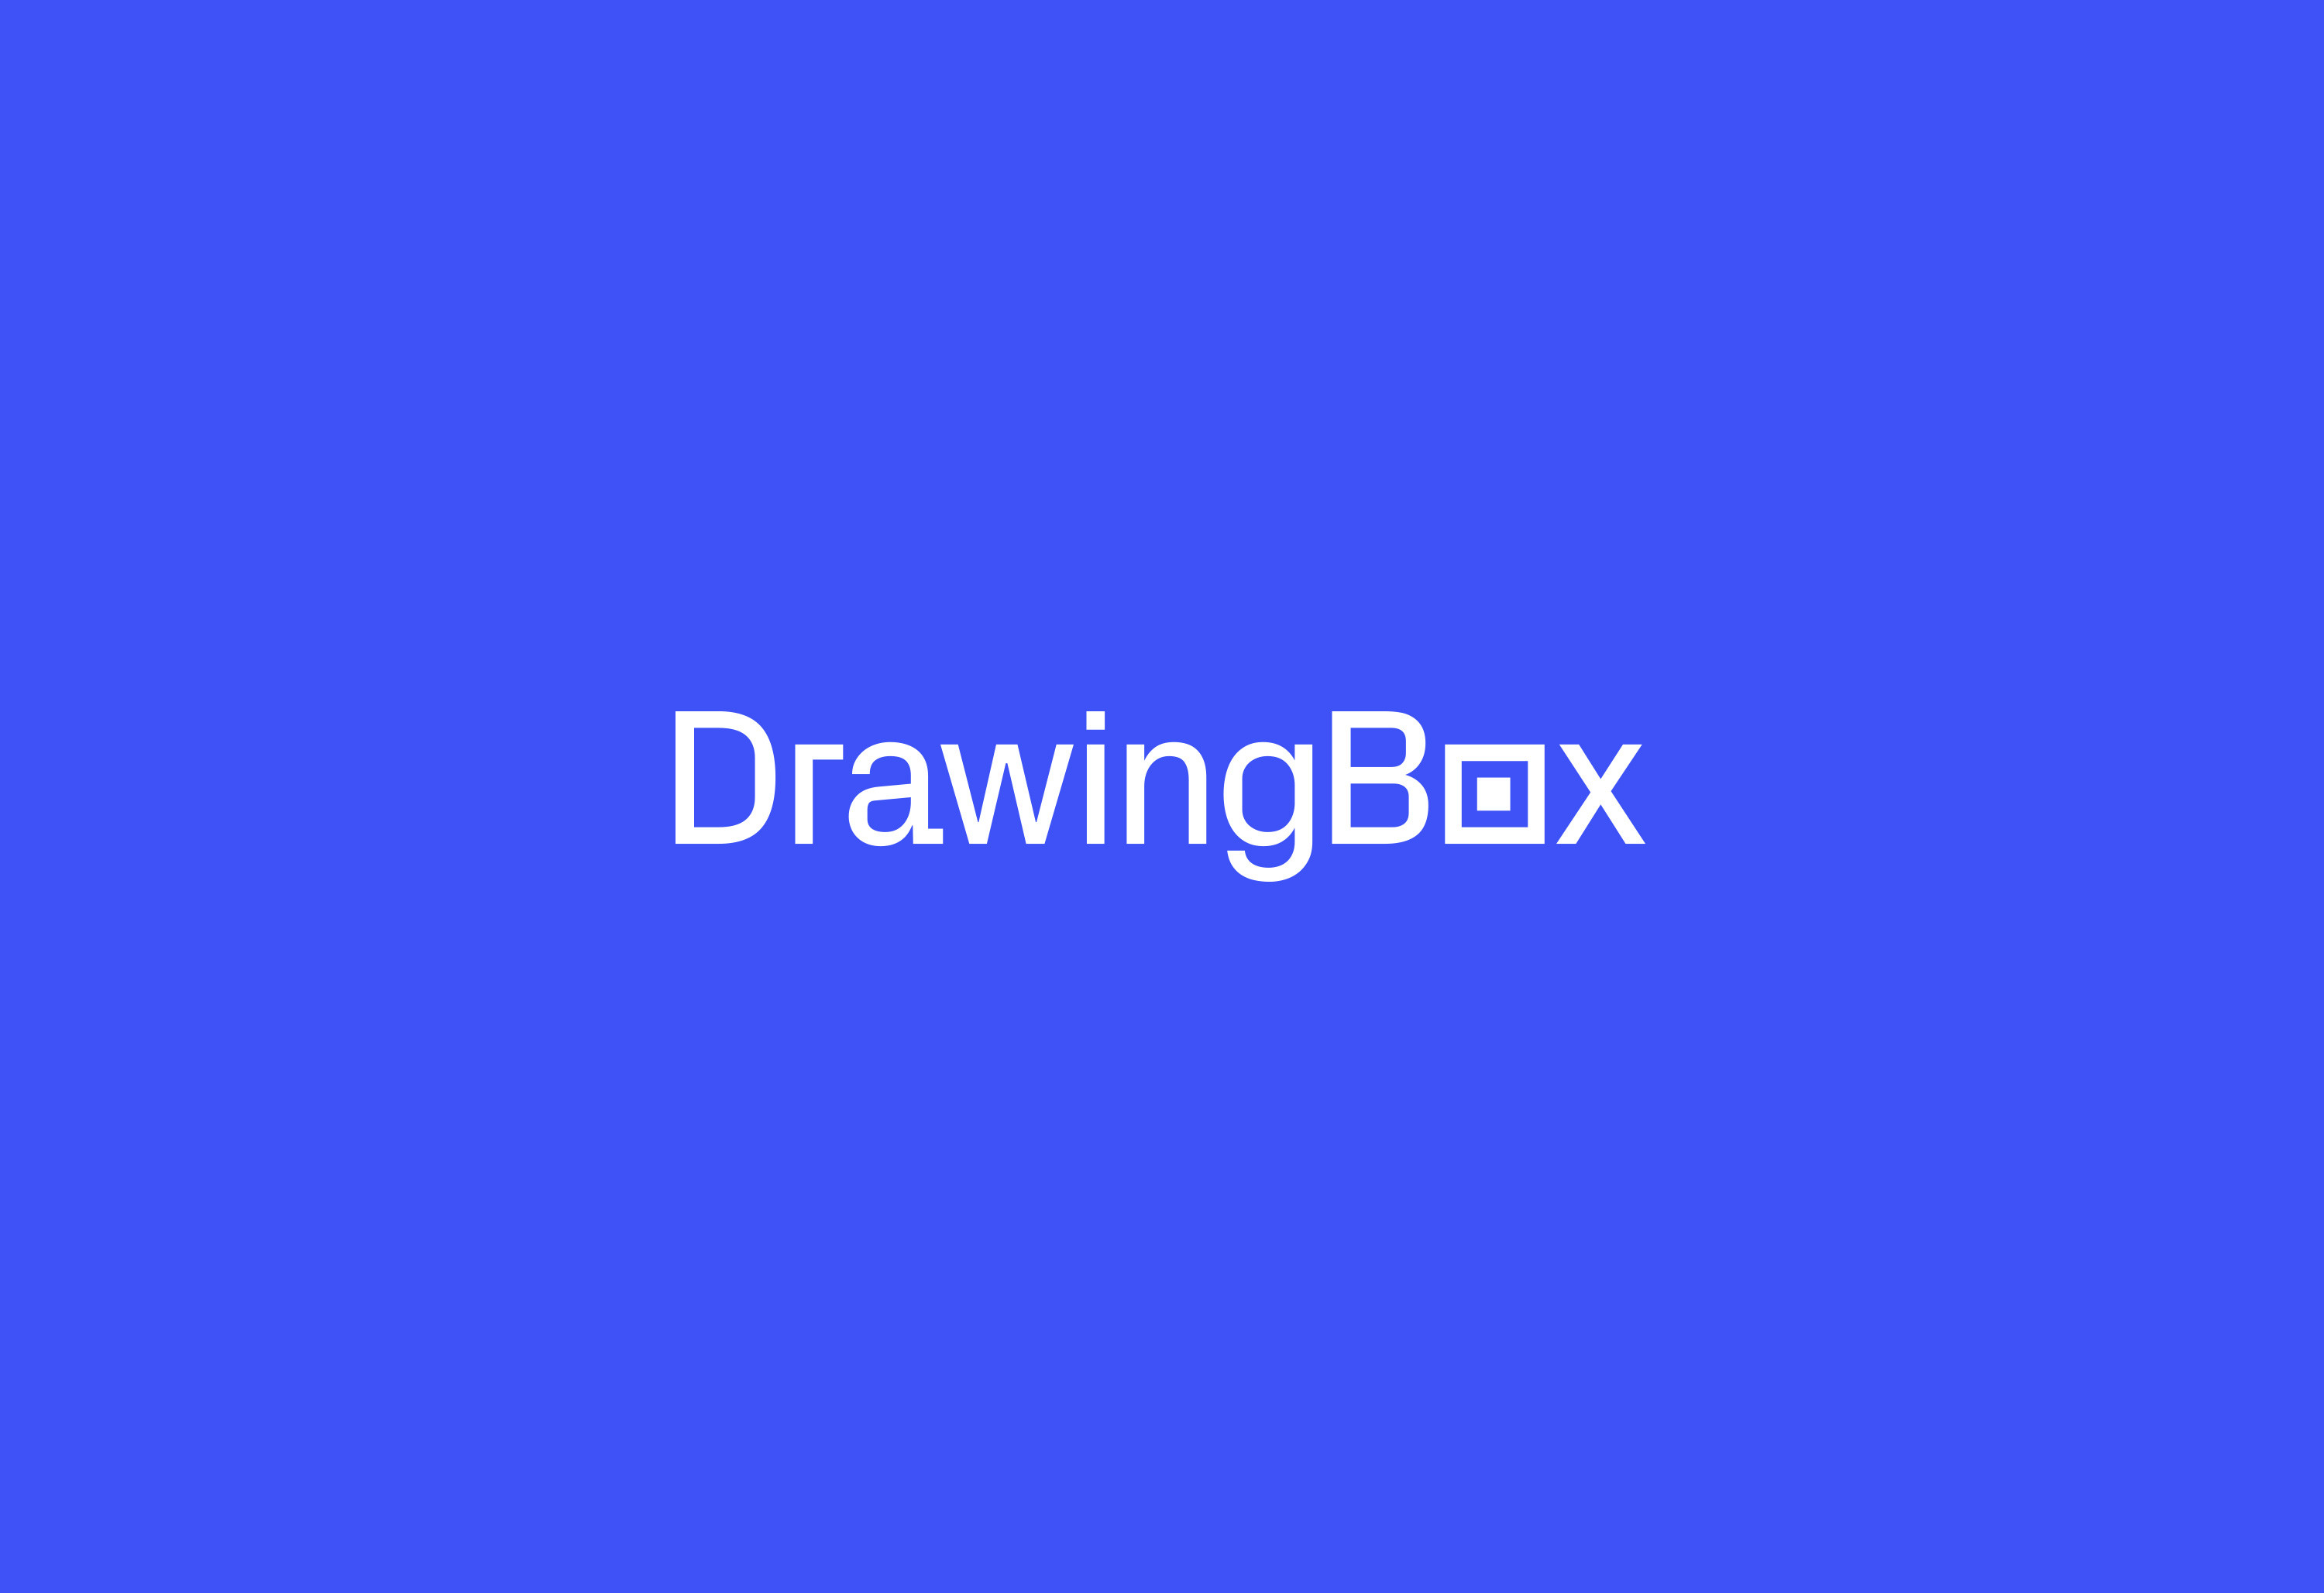 Drawing Box wordmark logo on blue background